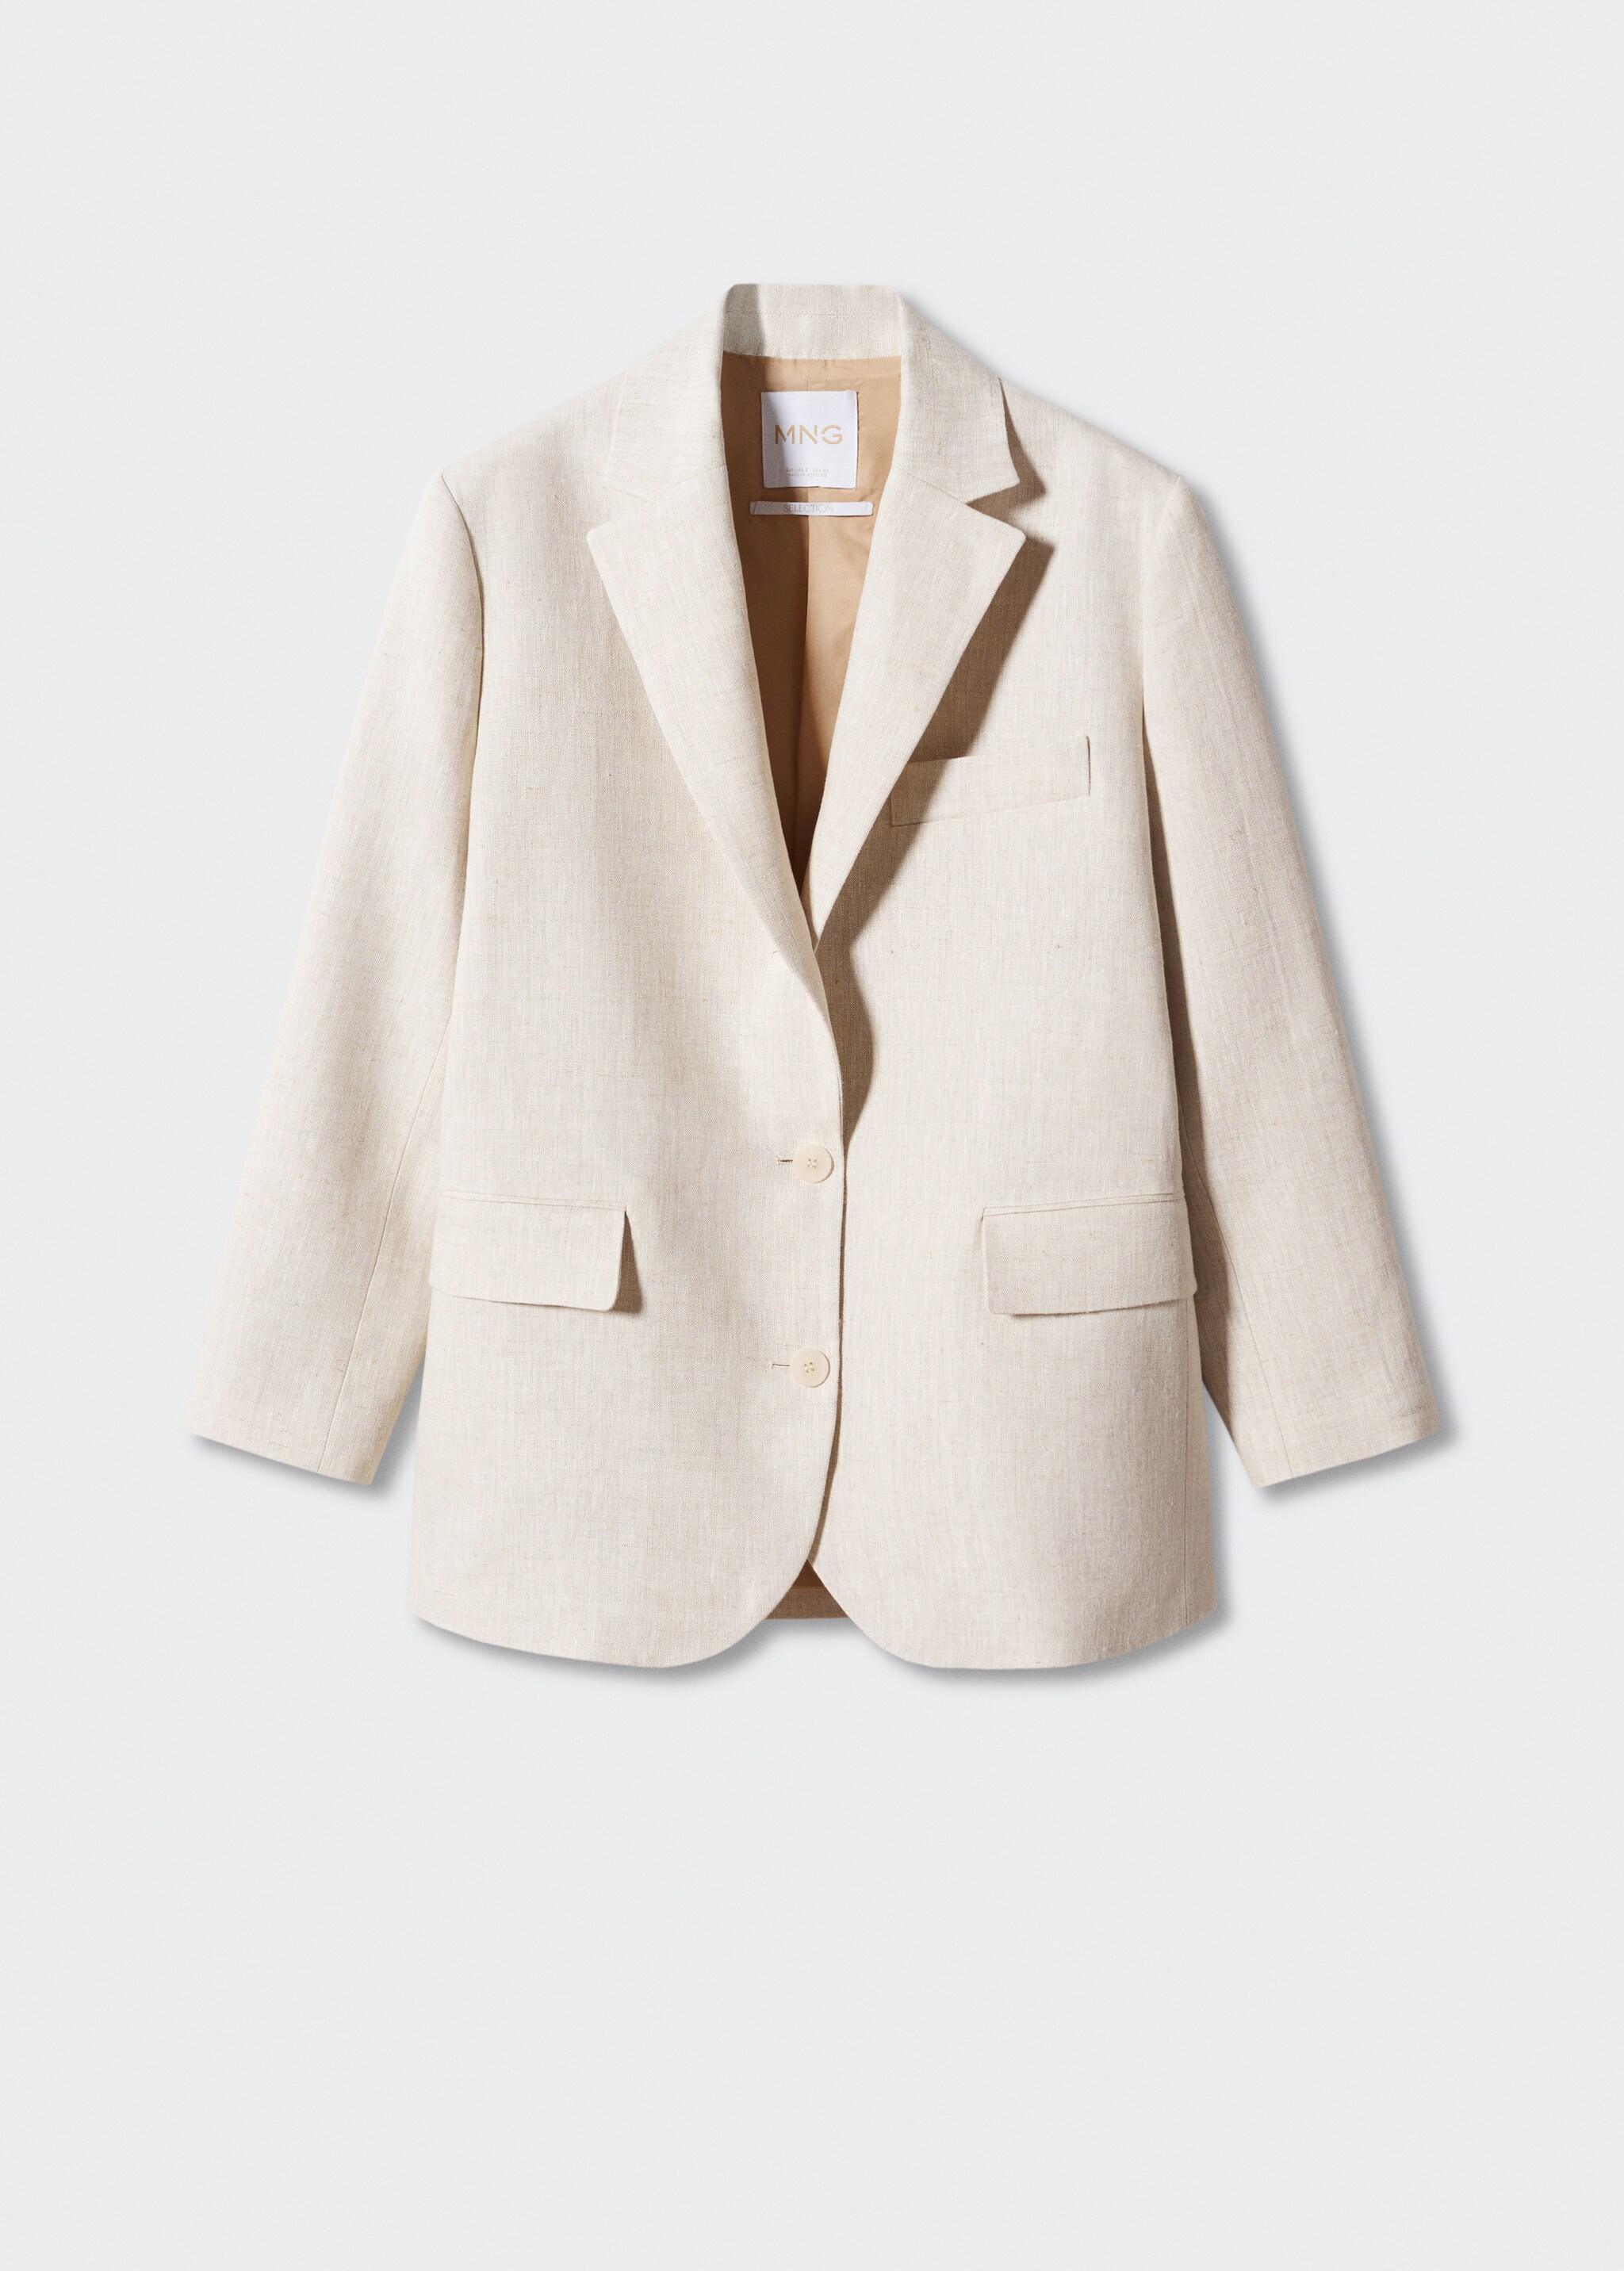 Linen oversized jacket  - Article without model